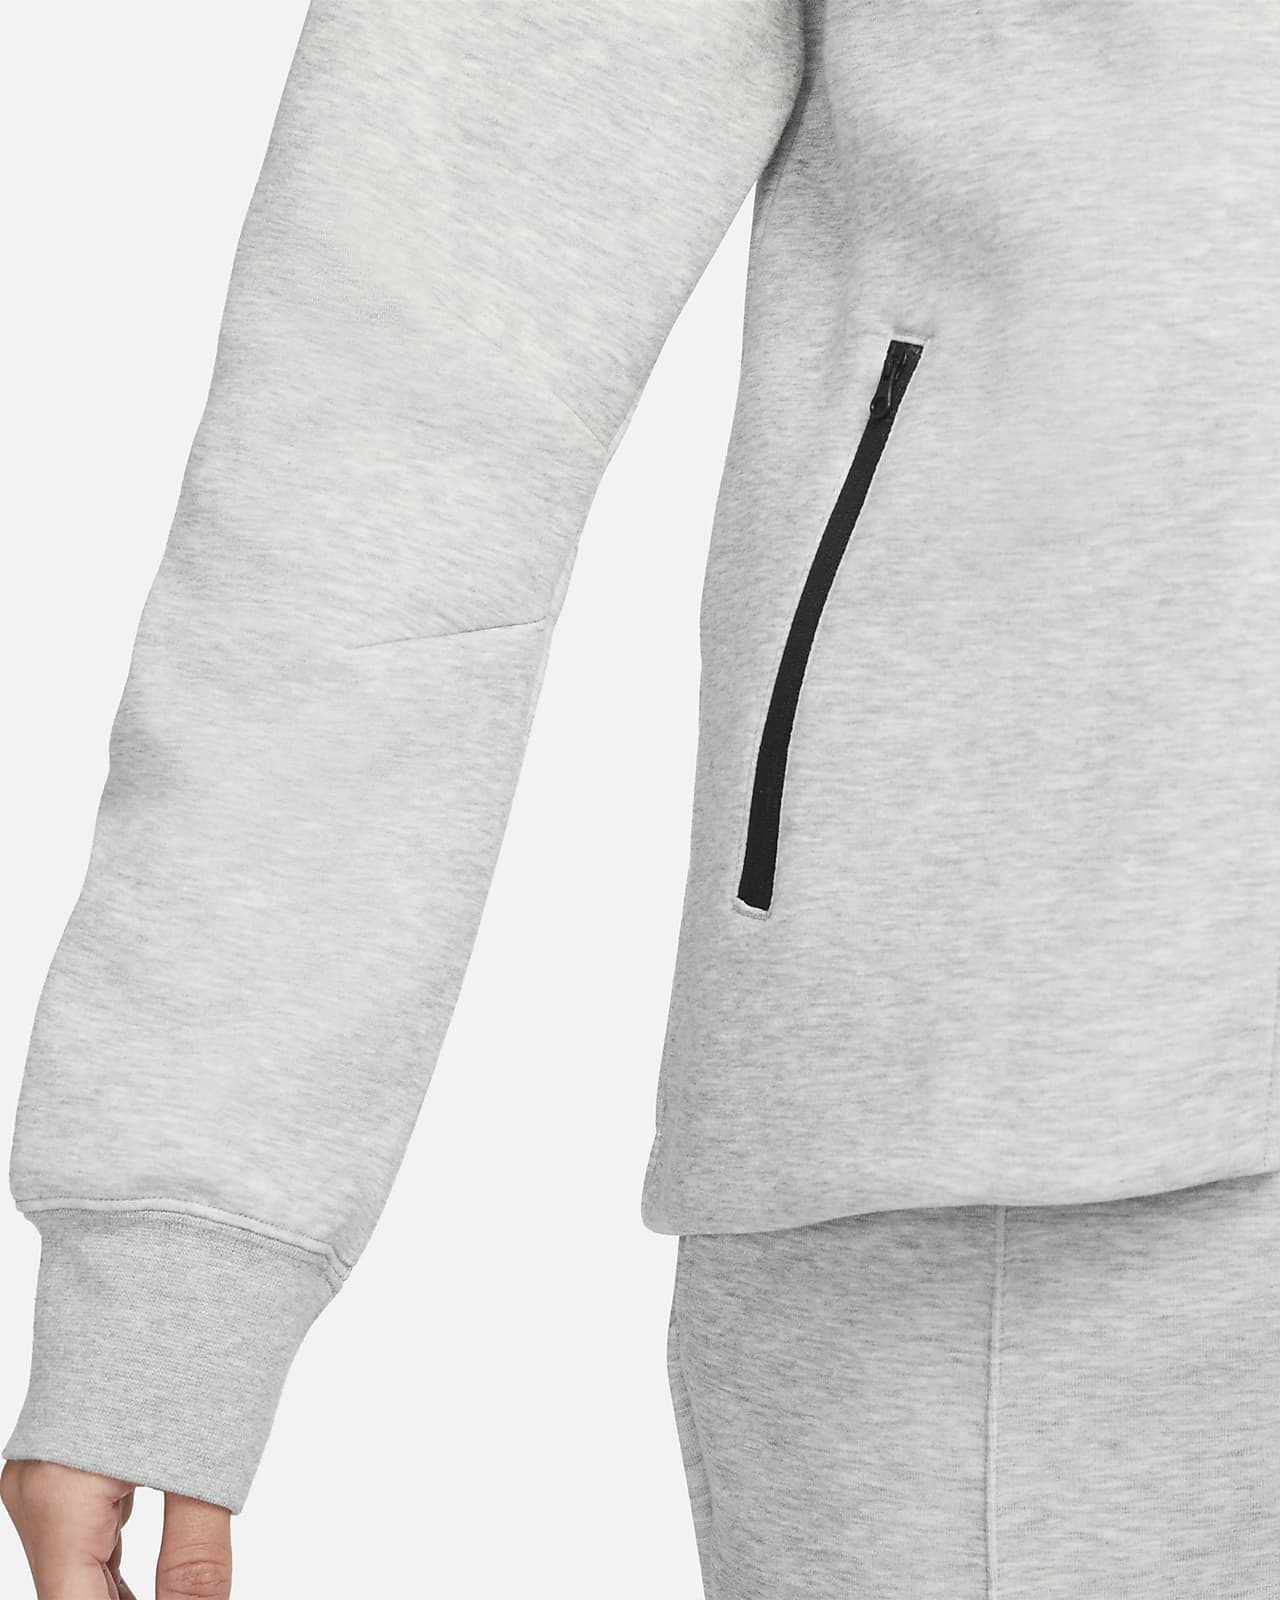 Women's Nike Sportswear Tech Fleece Pants XL Zipper White Black Training  Casual